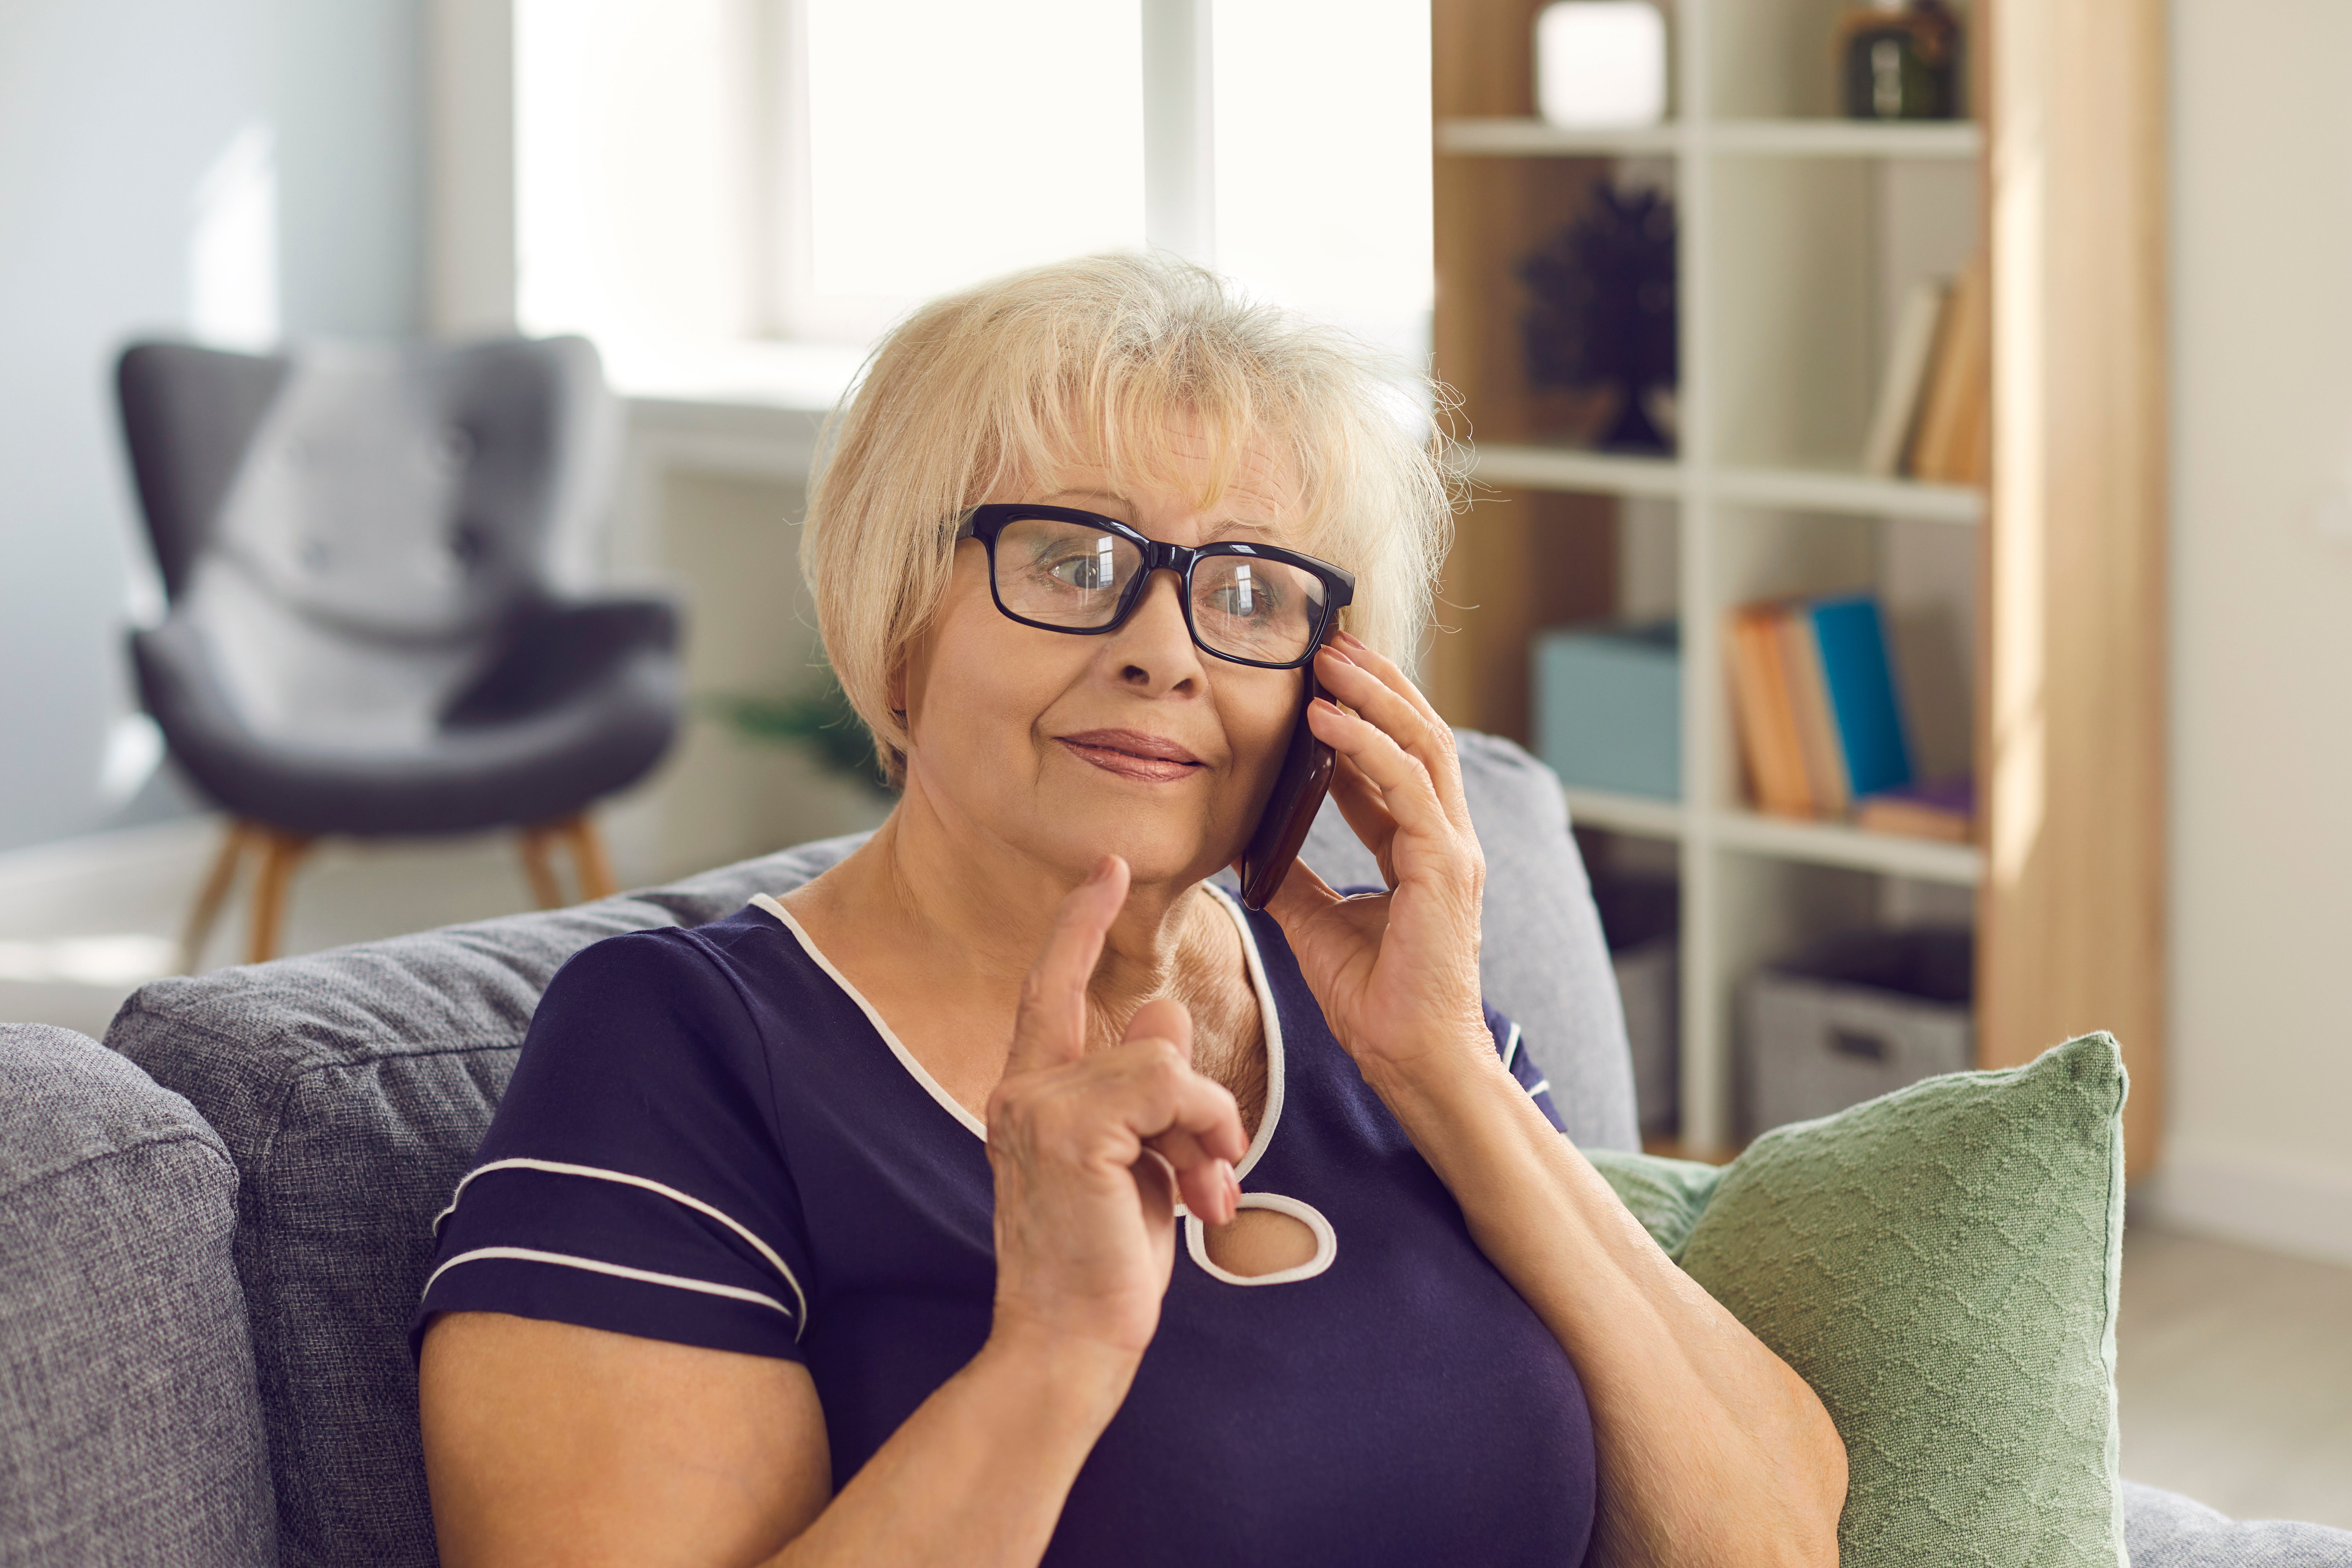 An older woman talking on her phone | Source: Shutterstock